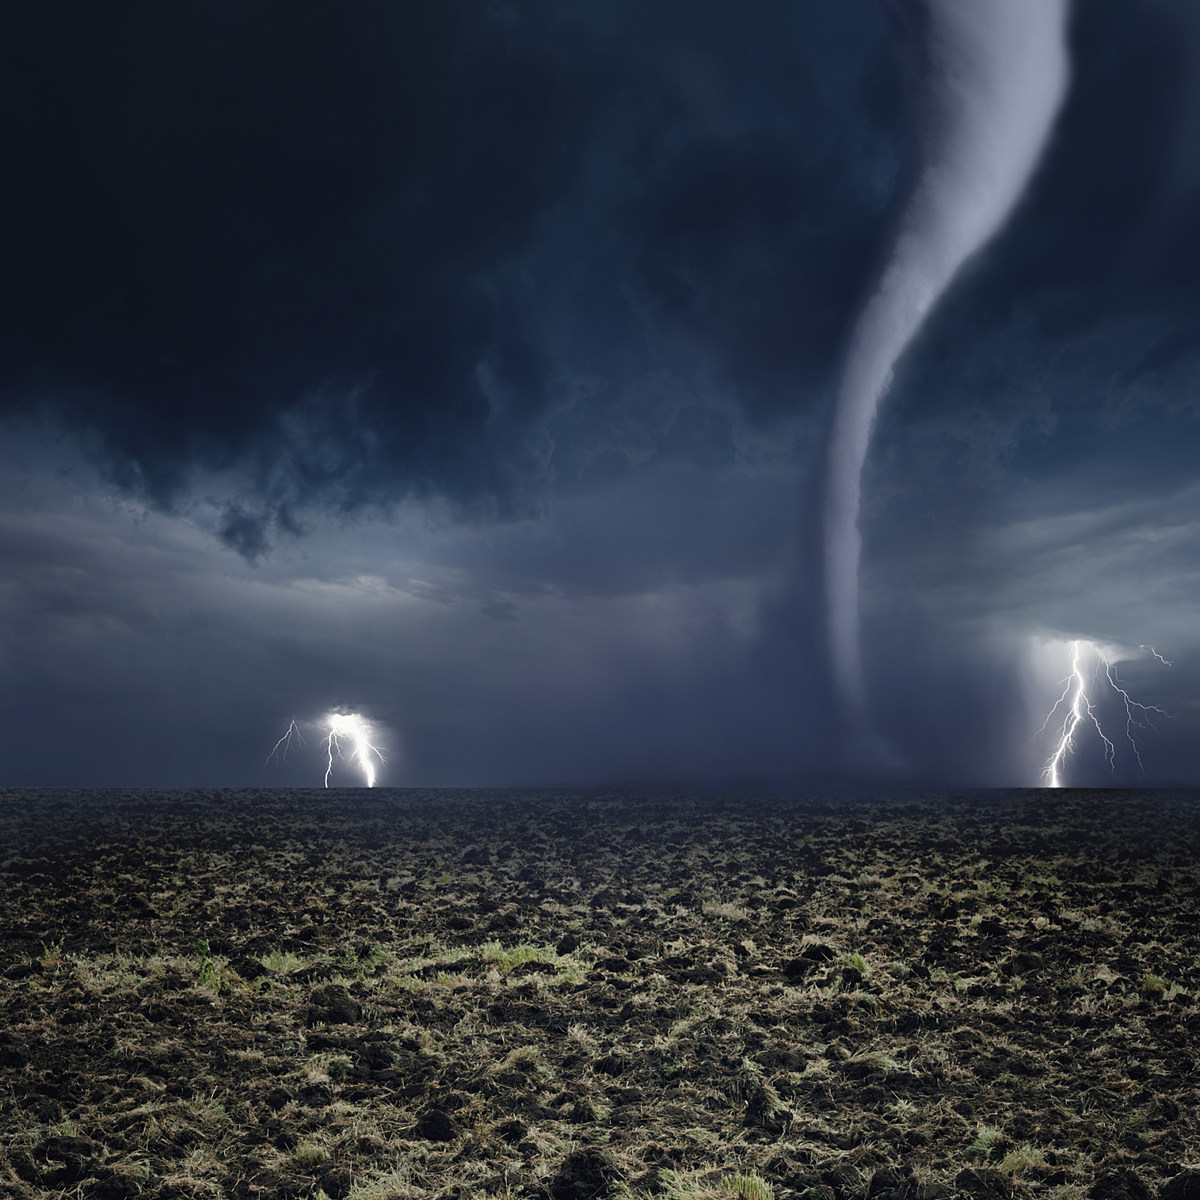 tornado lightning thunderstorms effects tornadoes causes violent history warning farmland michigan rockford disasters istock prepare season things natural propertycasualty360